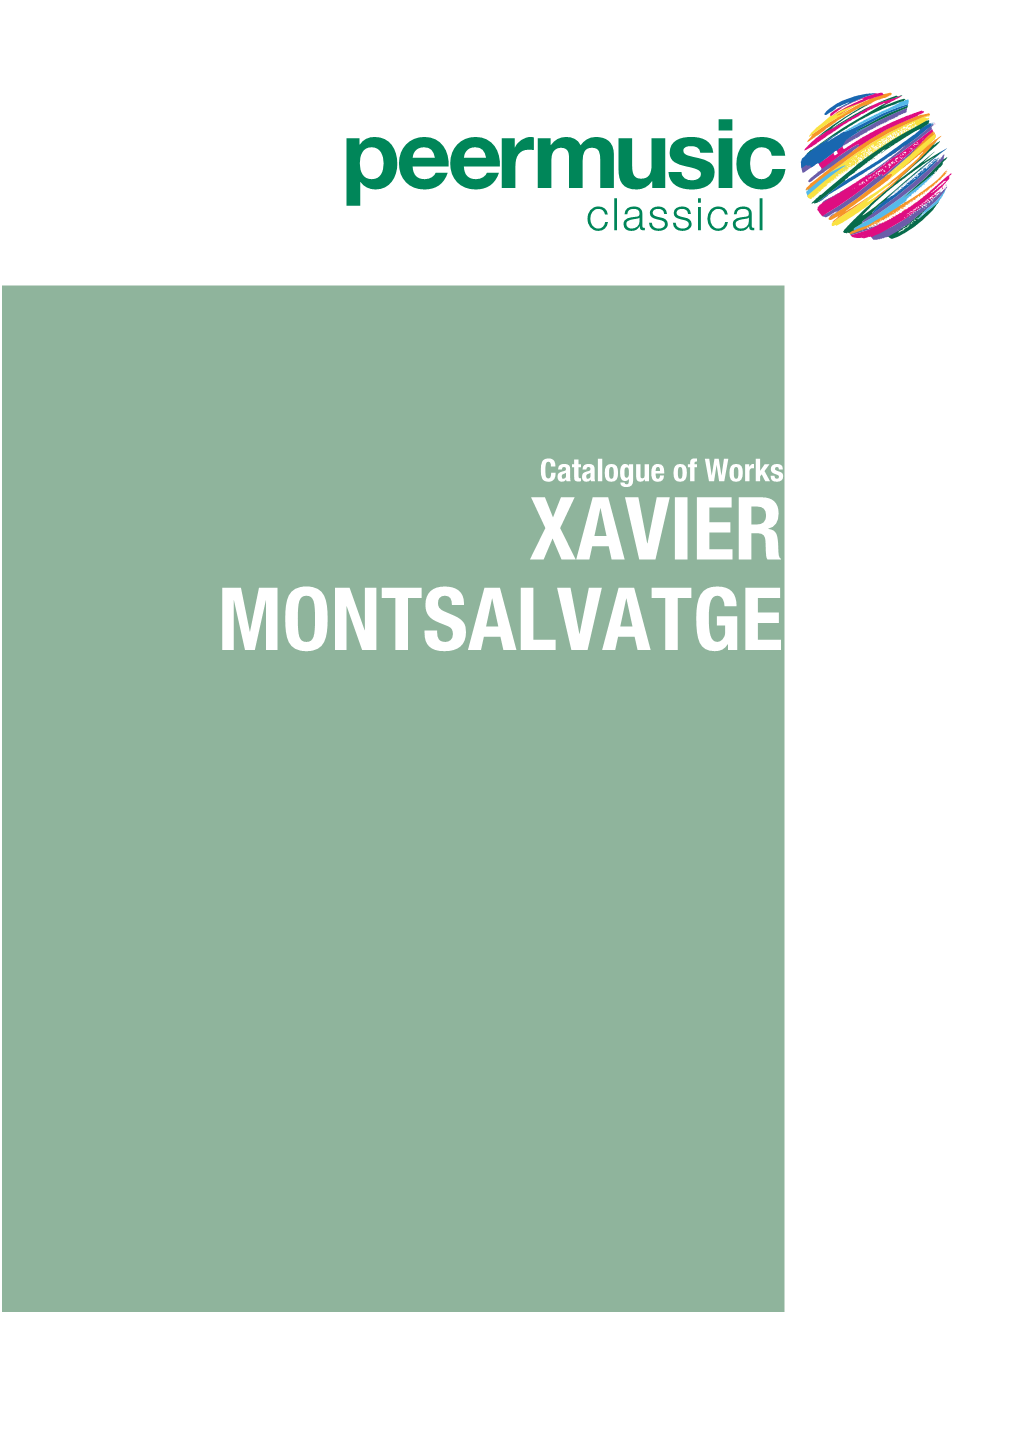 Catalogue of Works XAVIER MONTSALVATGE